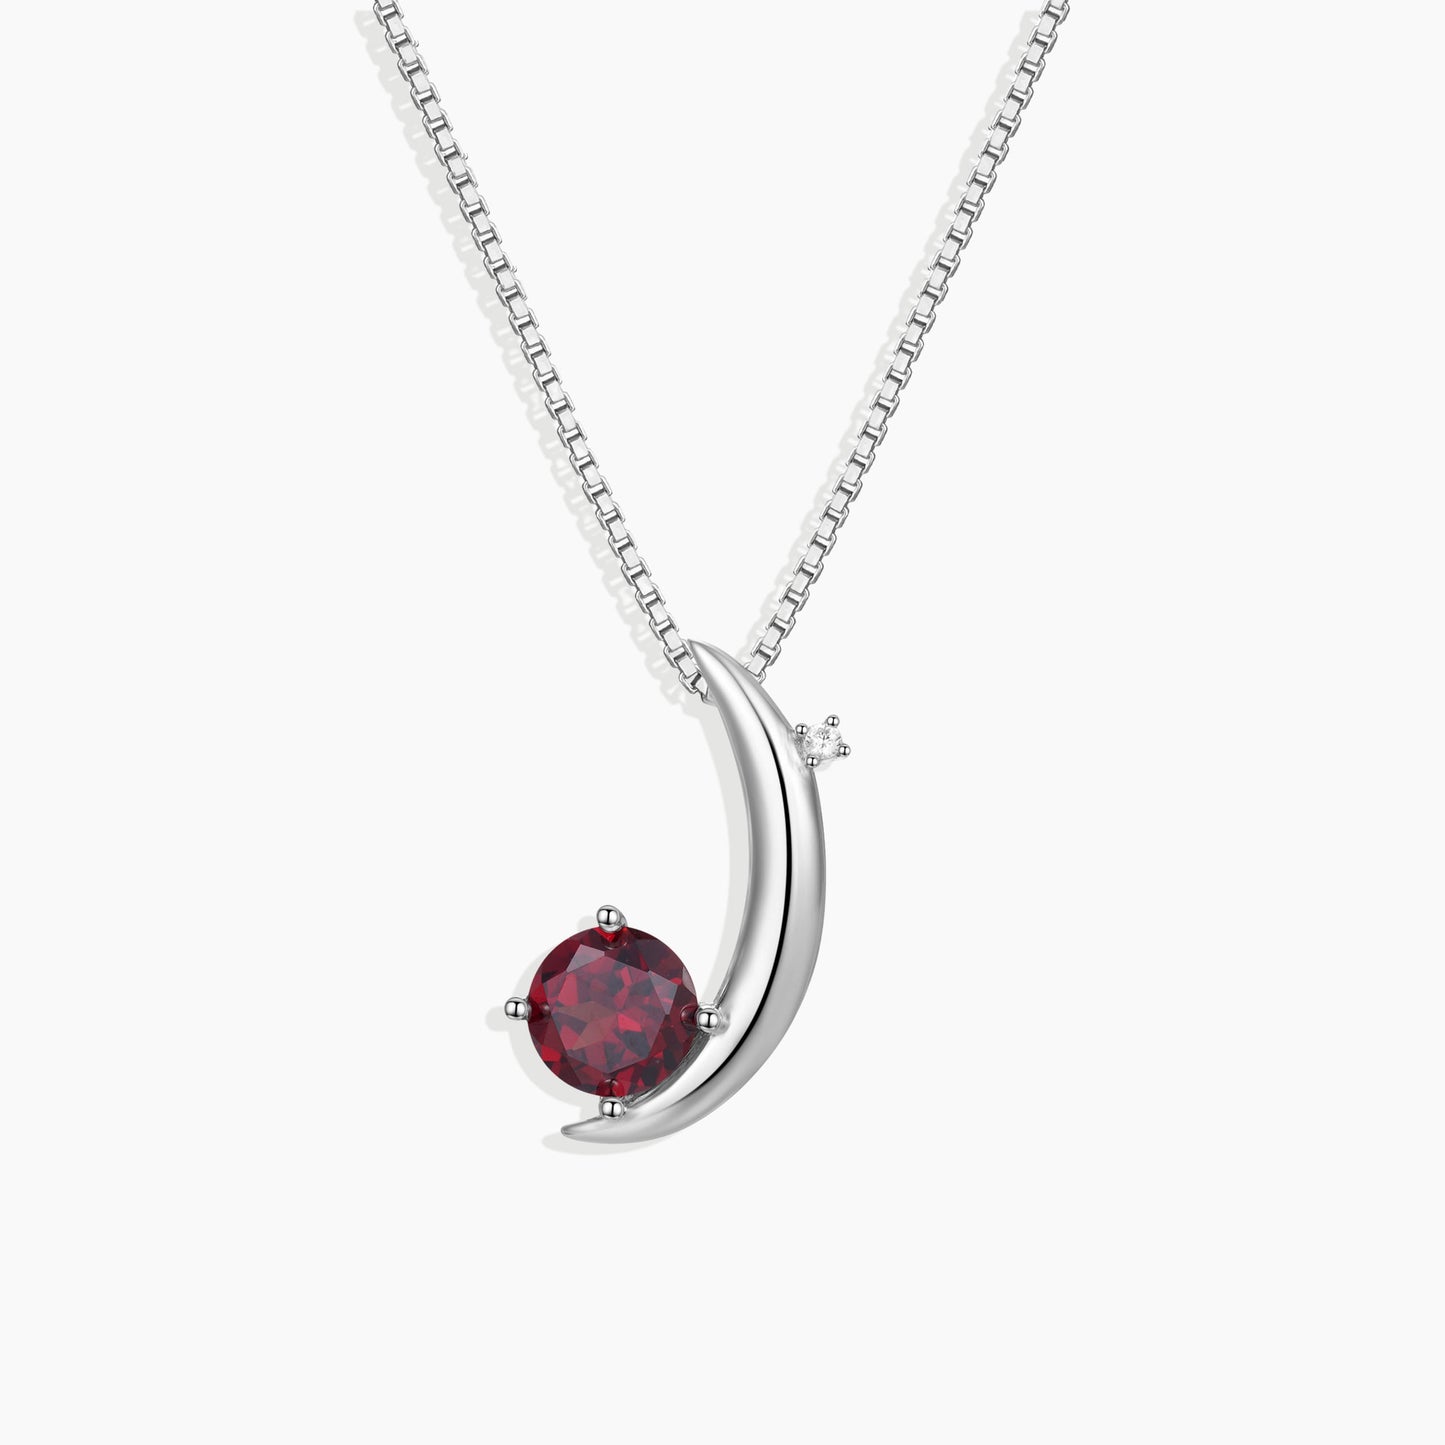 Garnet Half Moon Pendant Necklace in Sterling Silver